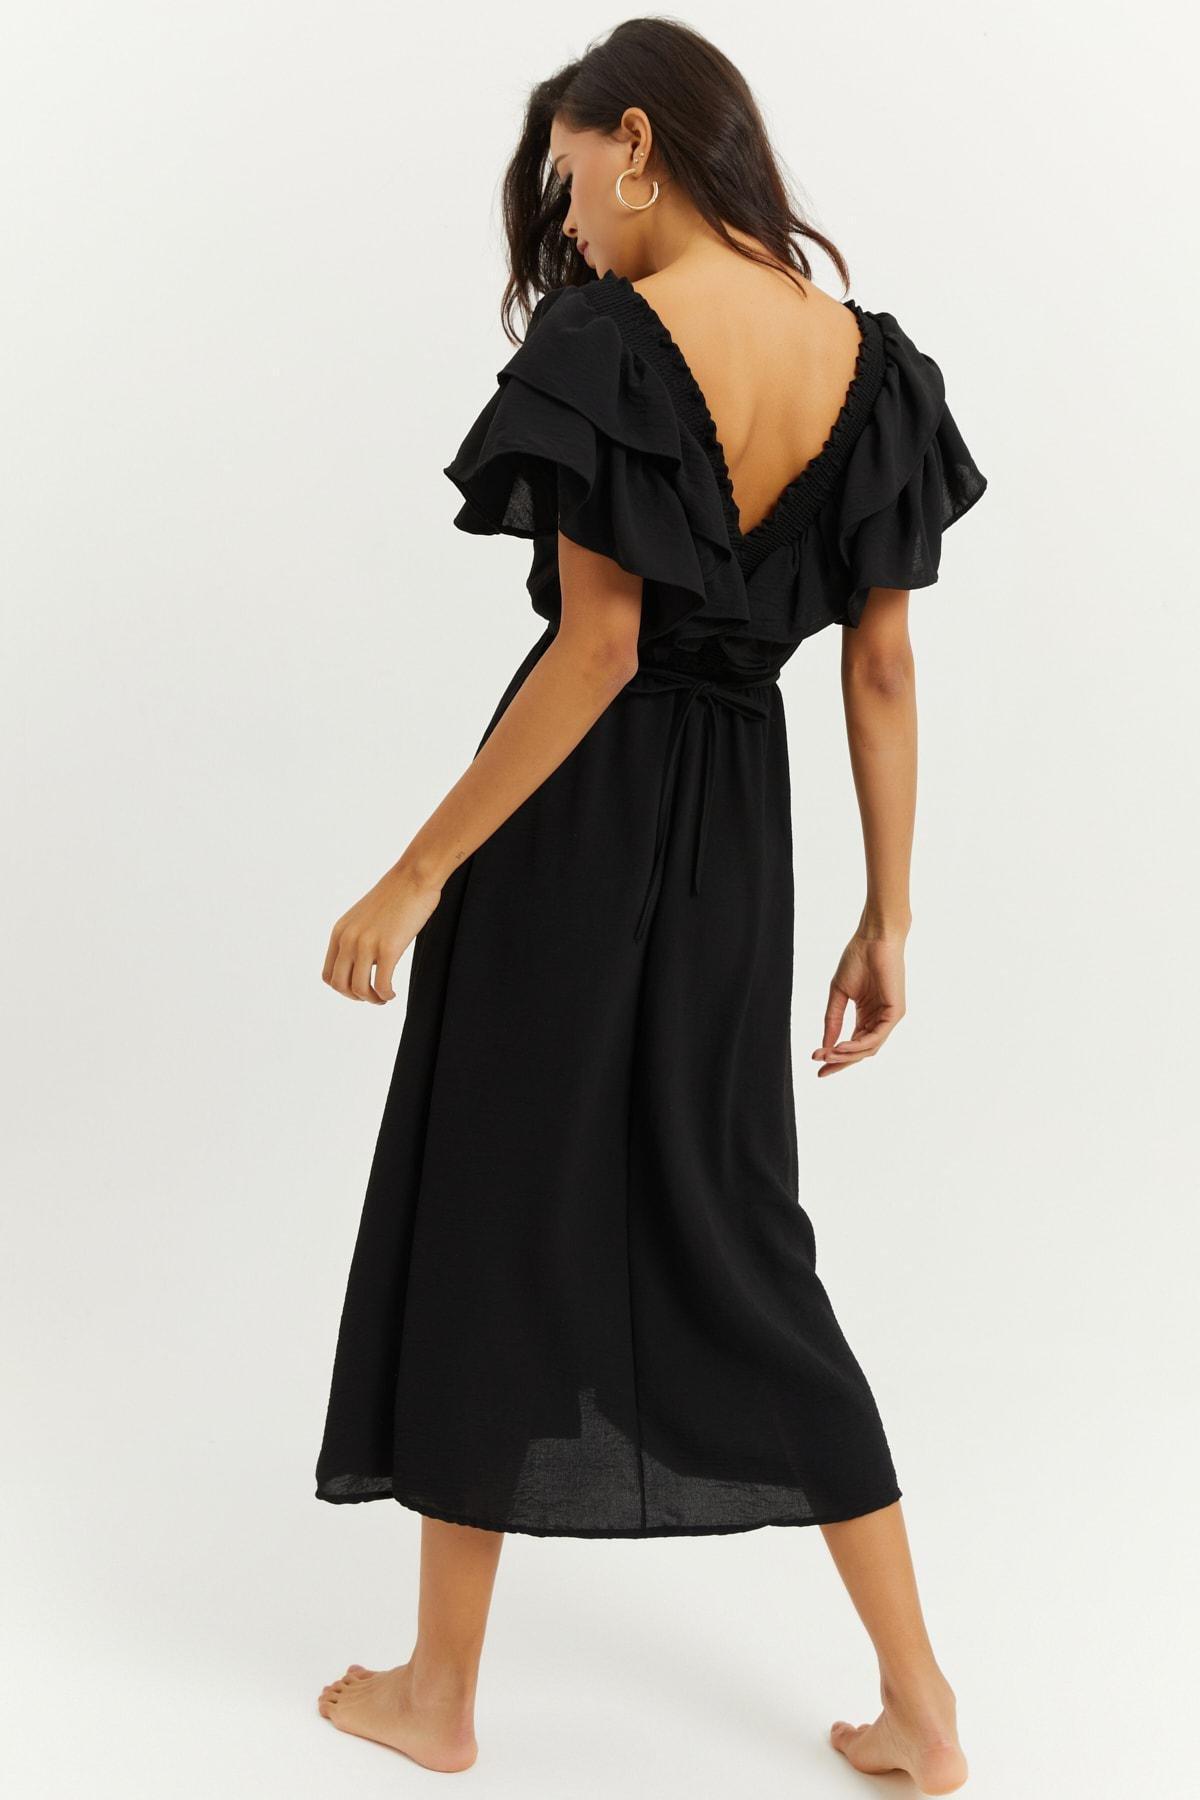 Cool & Sexy - Black Puffed Sleeve A-Line Dress